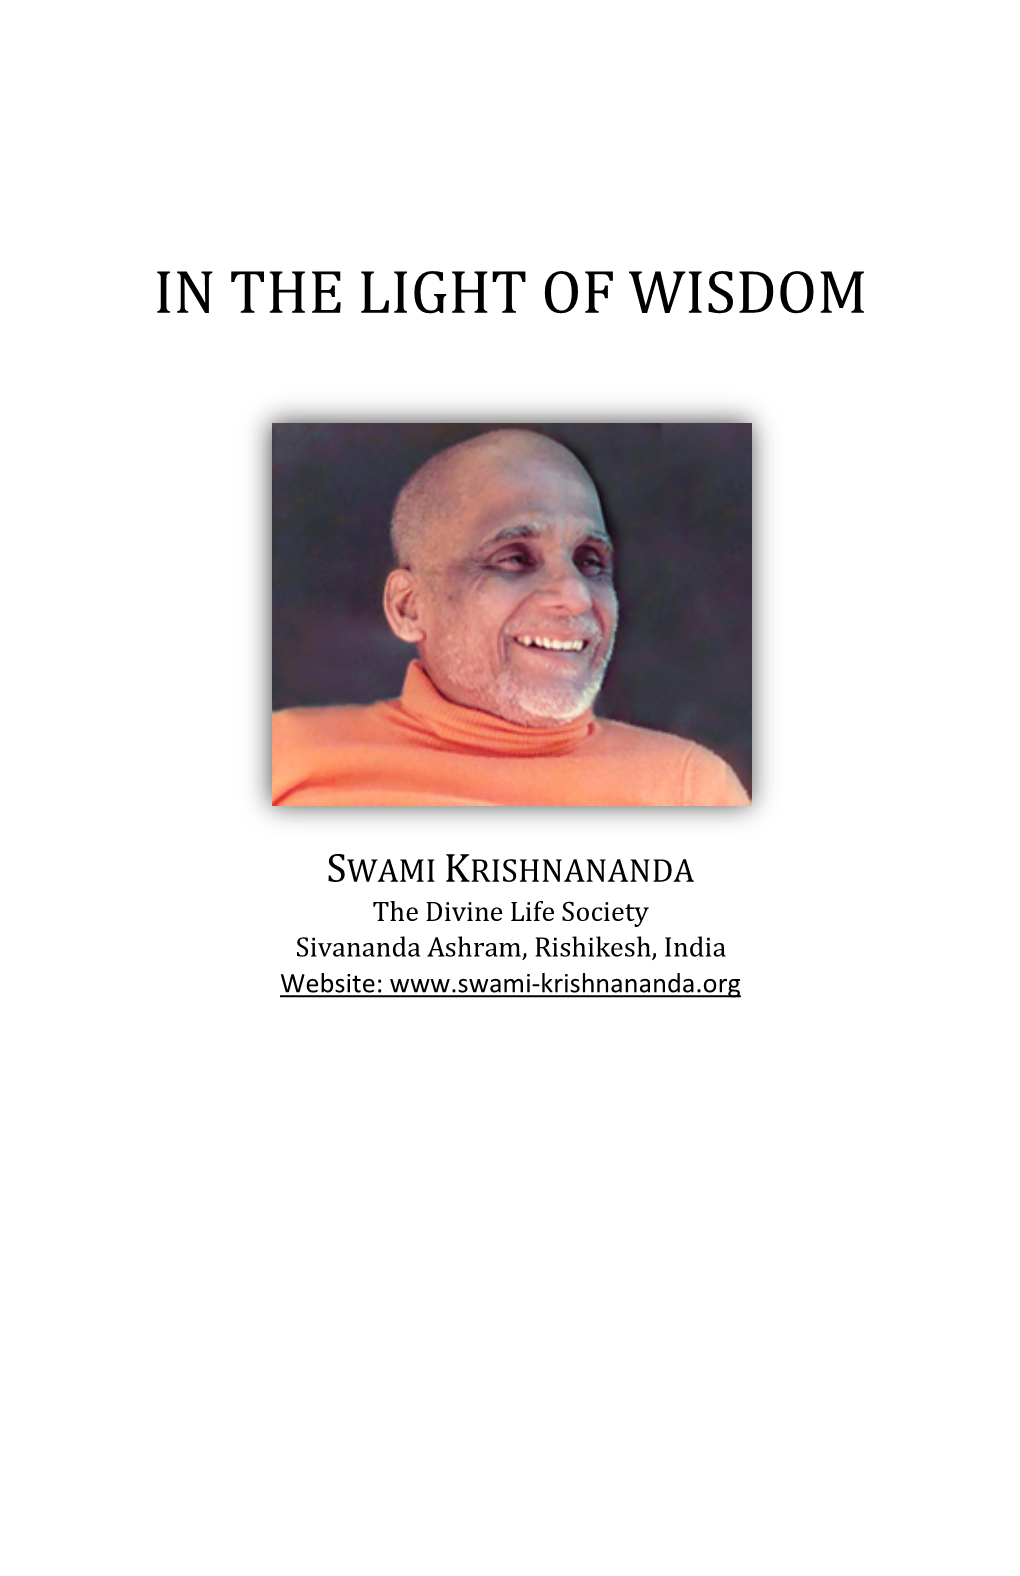 In the Light of Wisdom